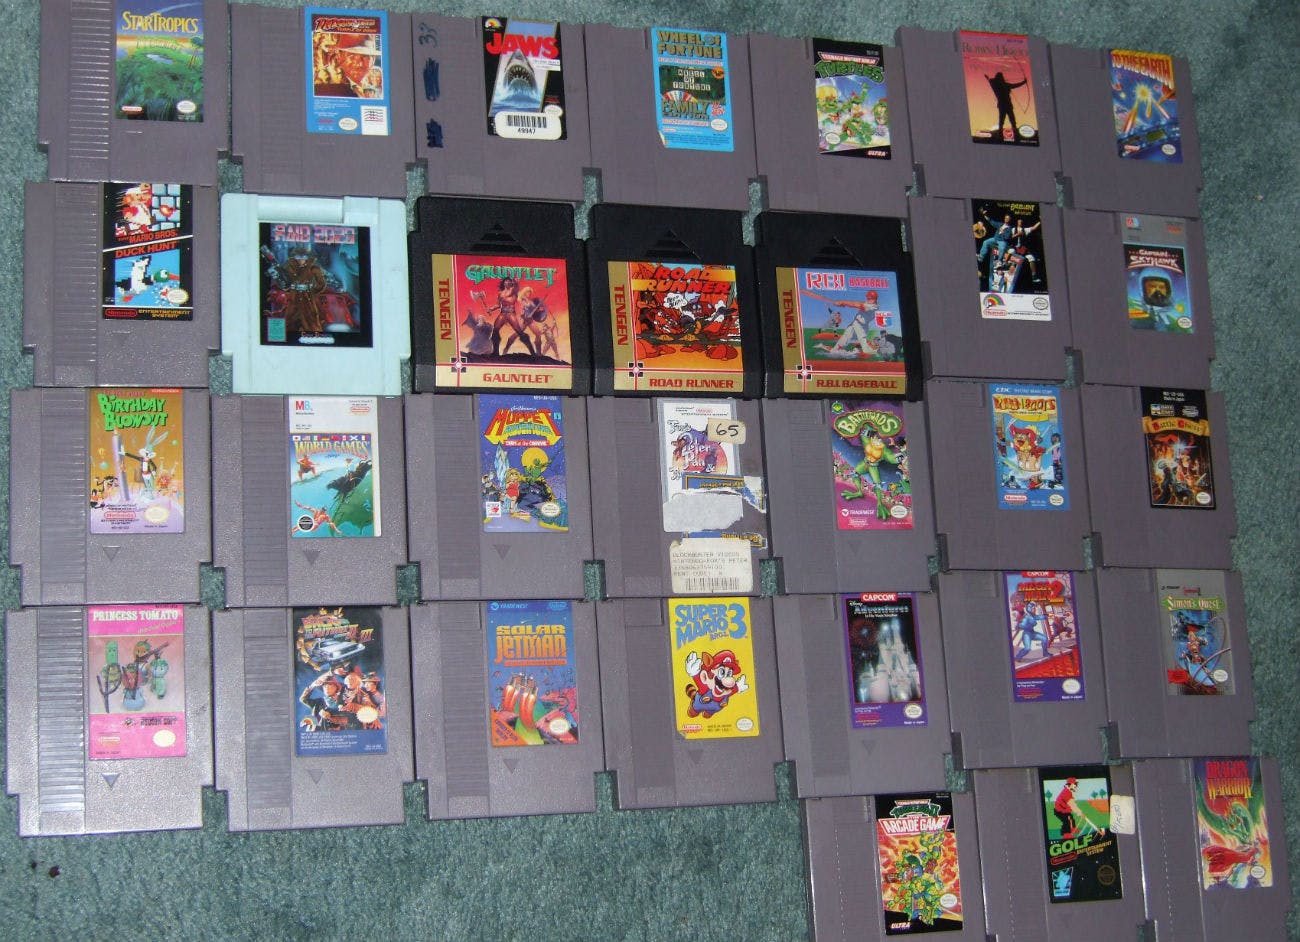 Classic games collection. Nintendo Entertainment System games. NES all games. Стандартные игры на Nintendo. Список всех игр на нес.